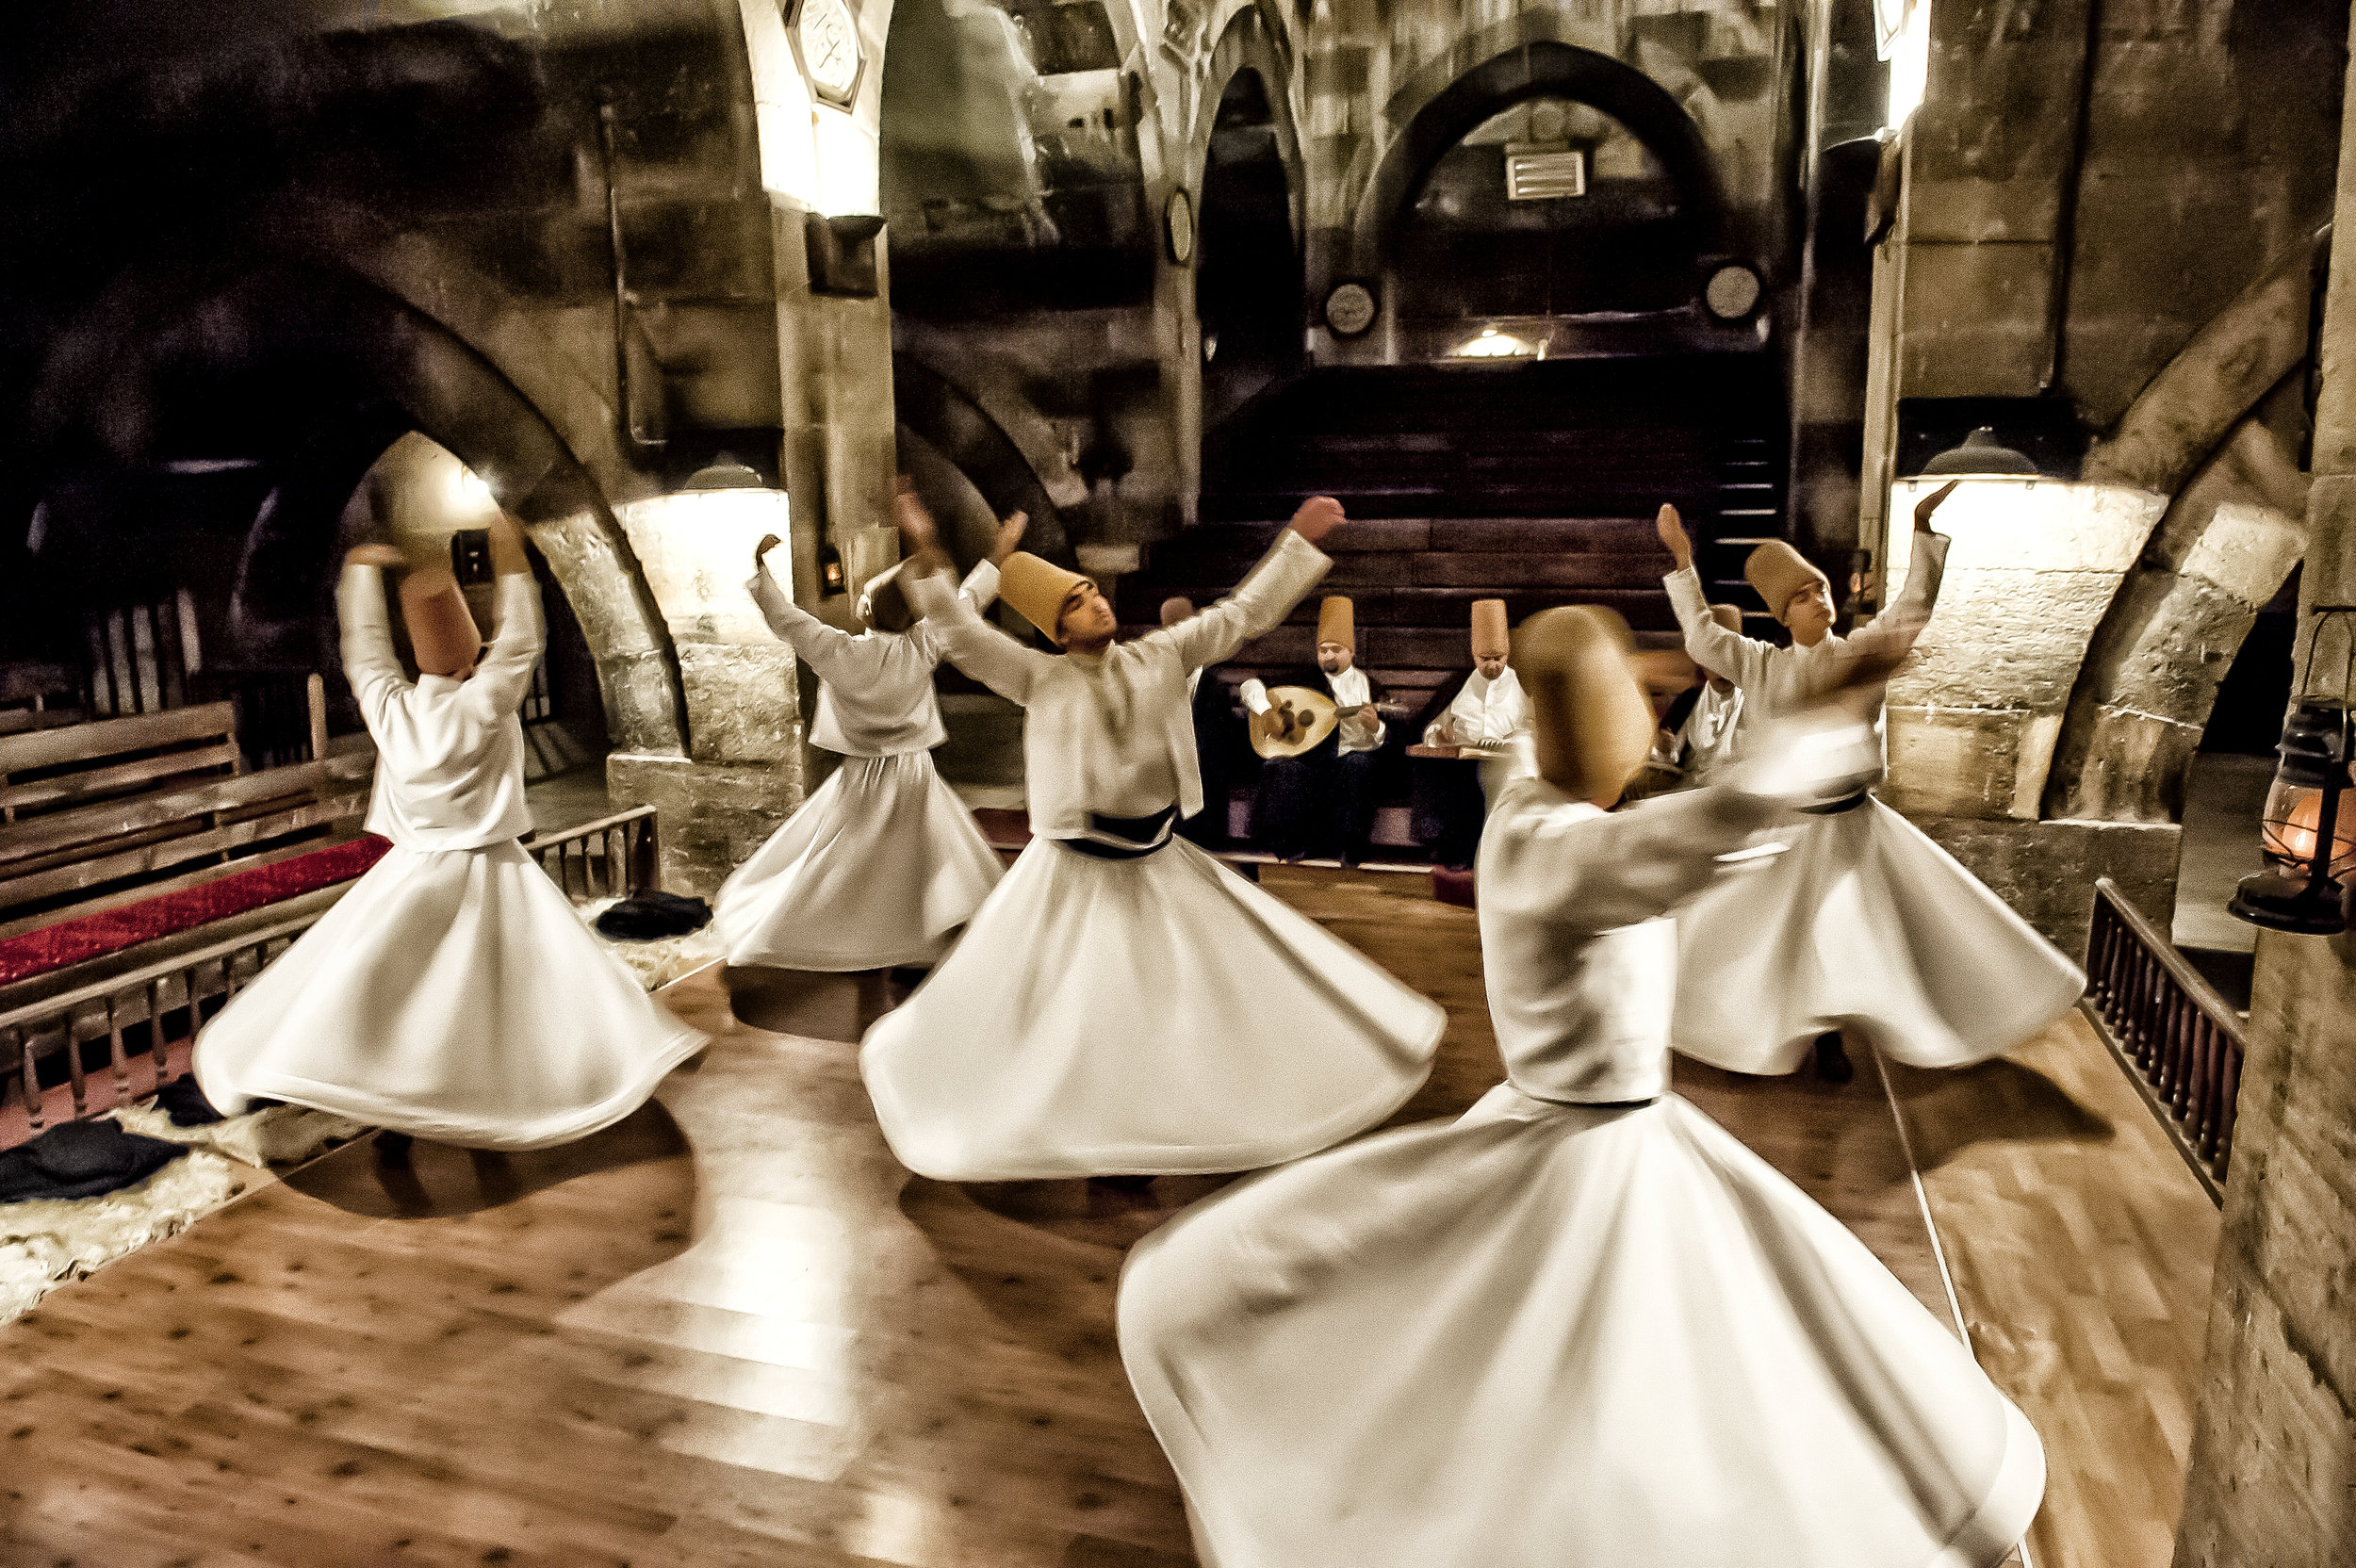 Derwisjen Dancers in Cappadocia Turkey for ANWB Reiz& magazine